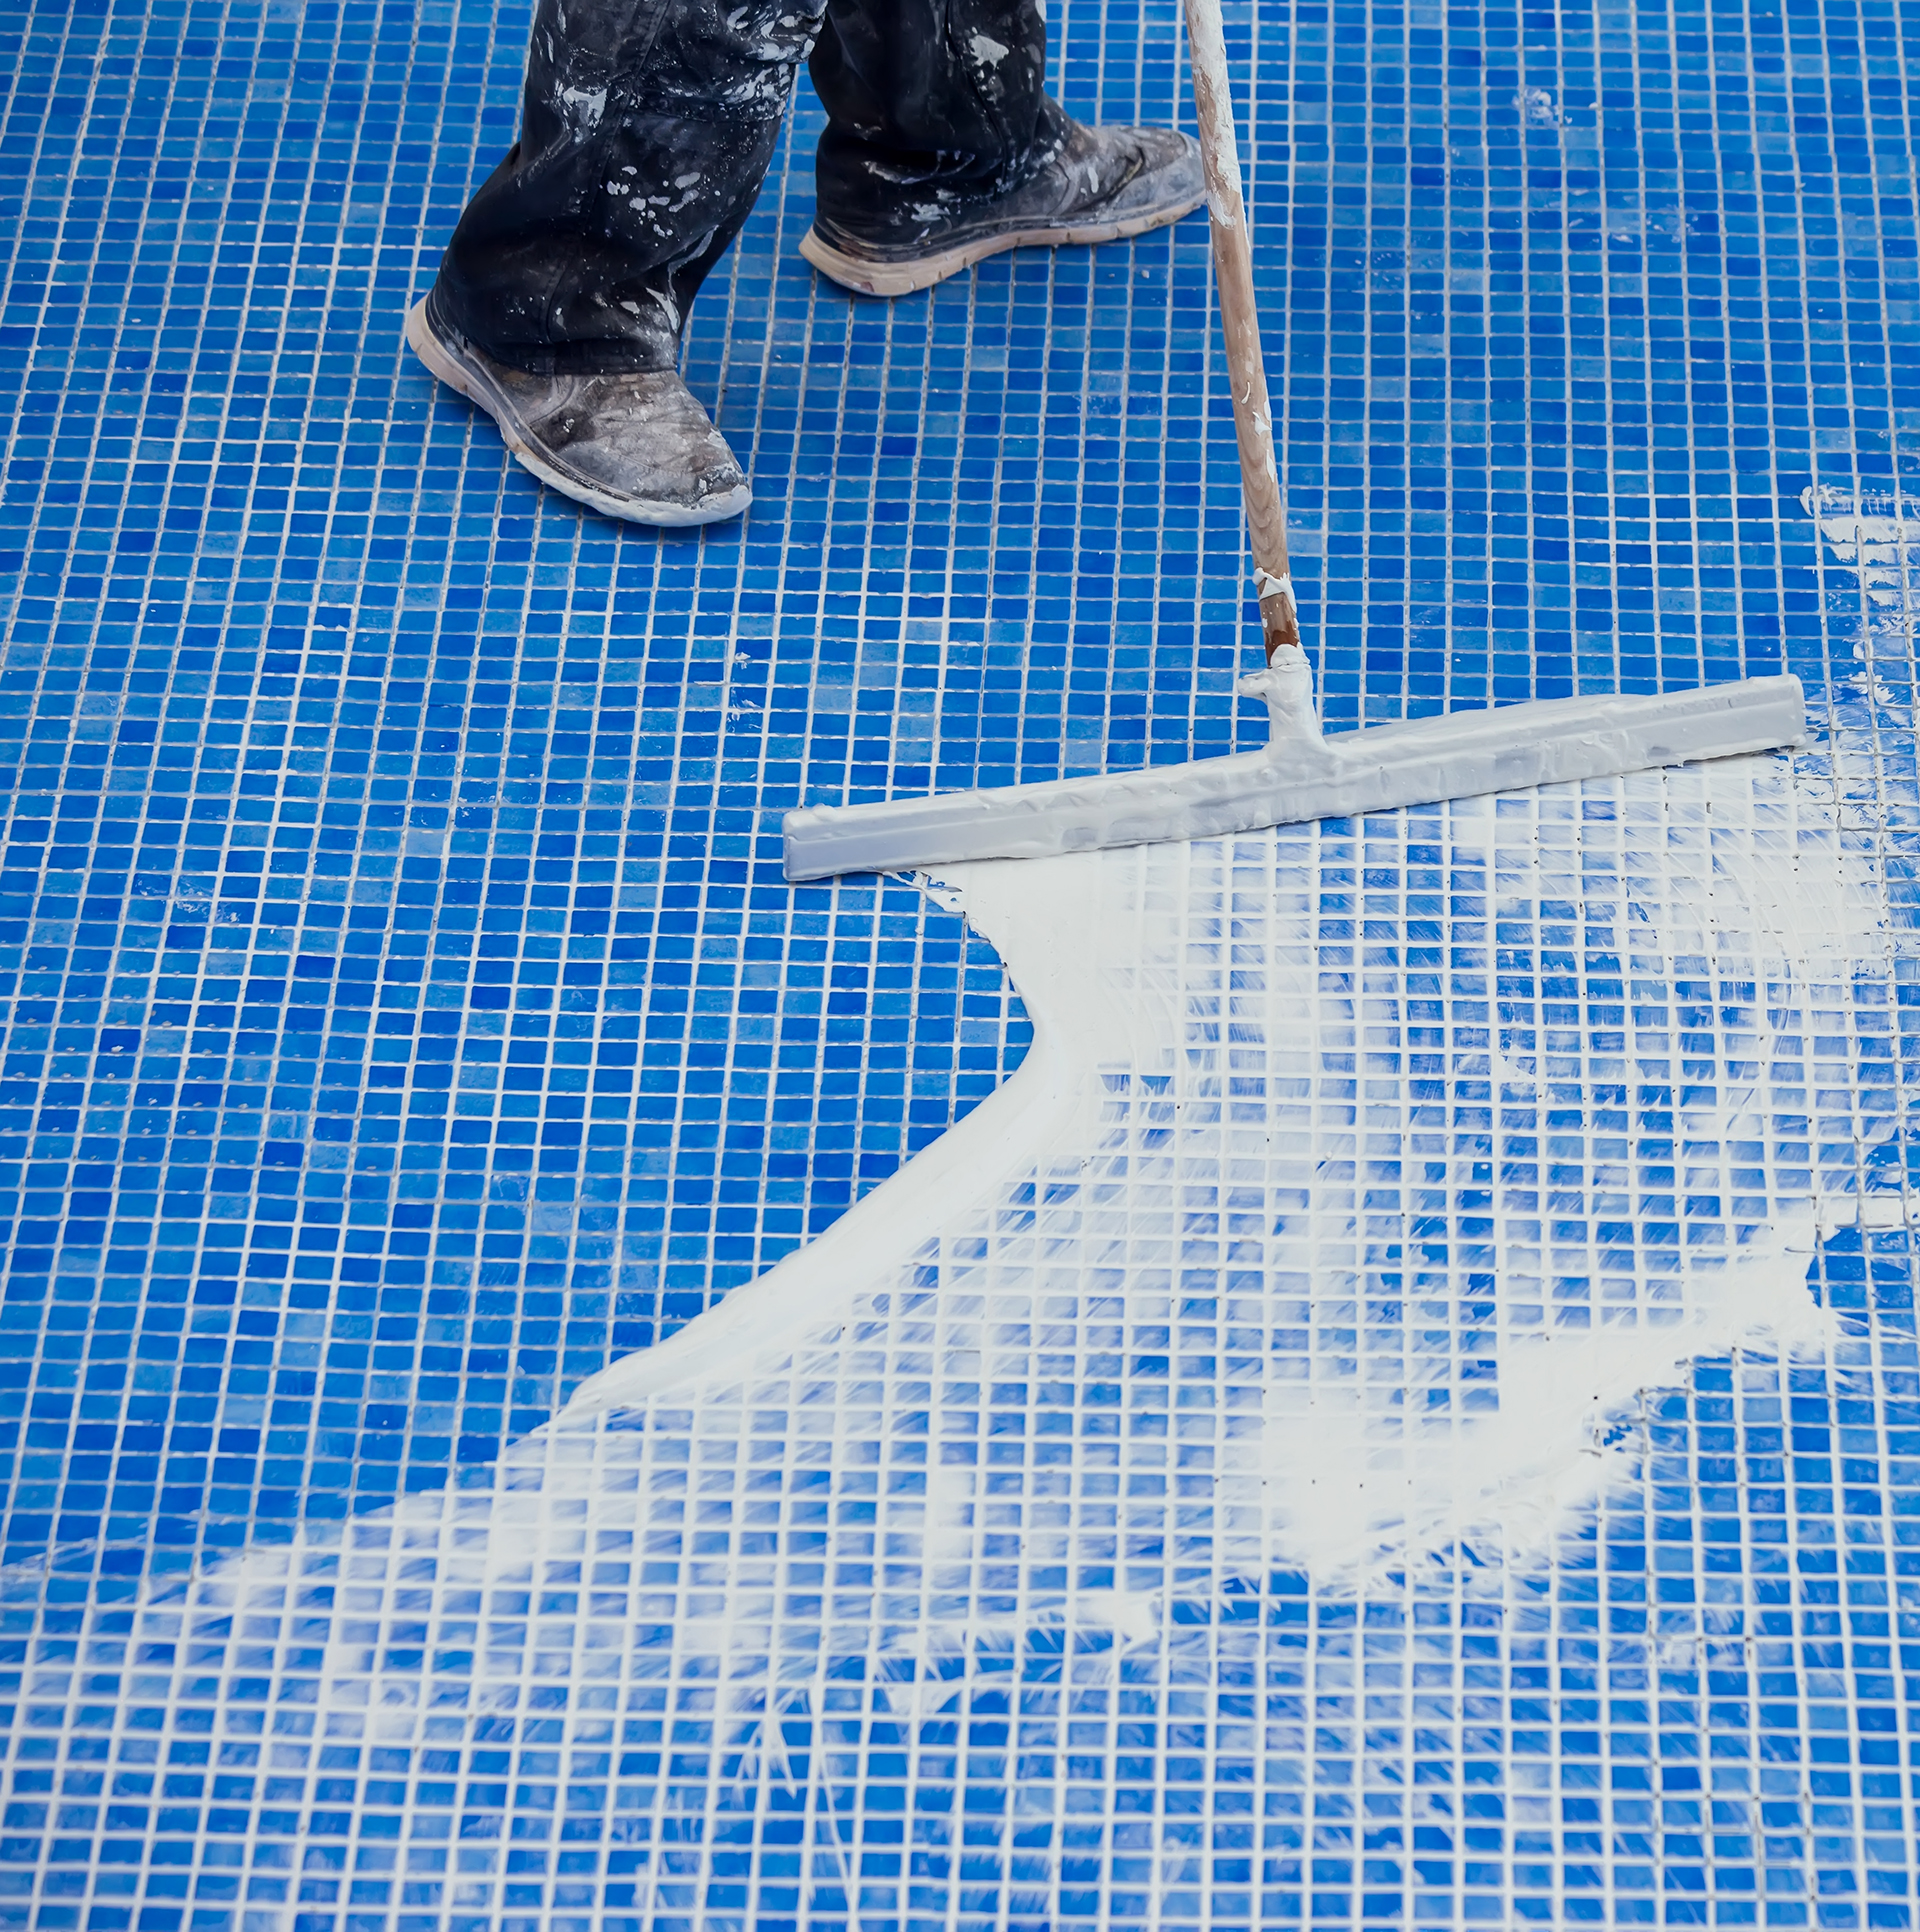 Worker covering seames on the tile in the pool. Pool repairing work